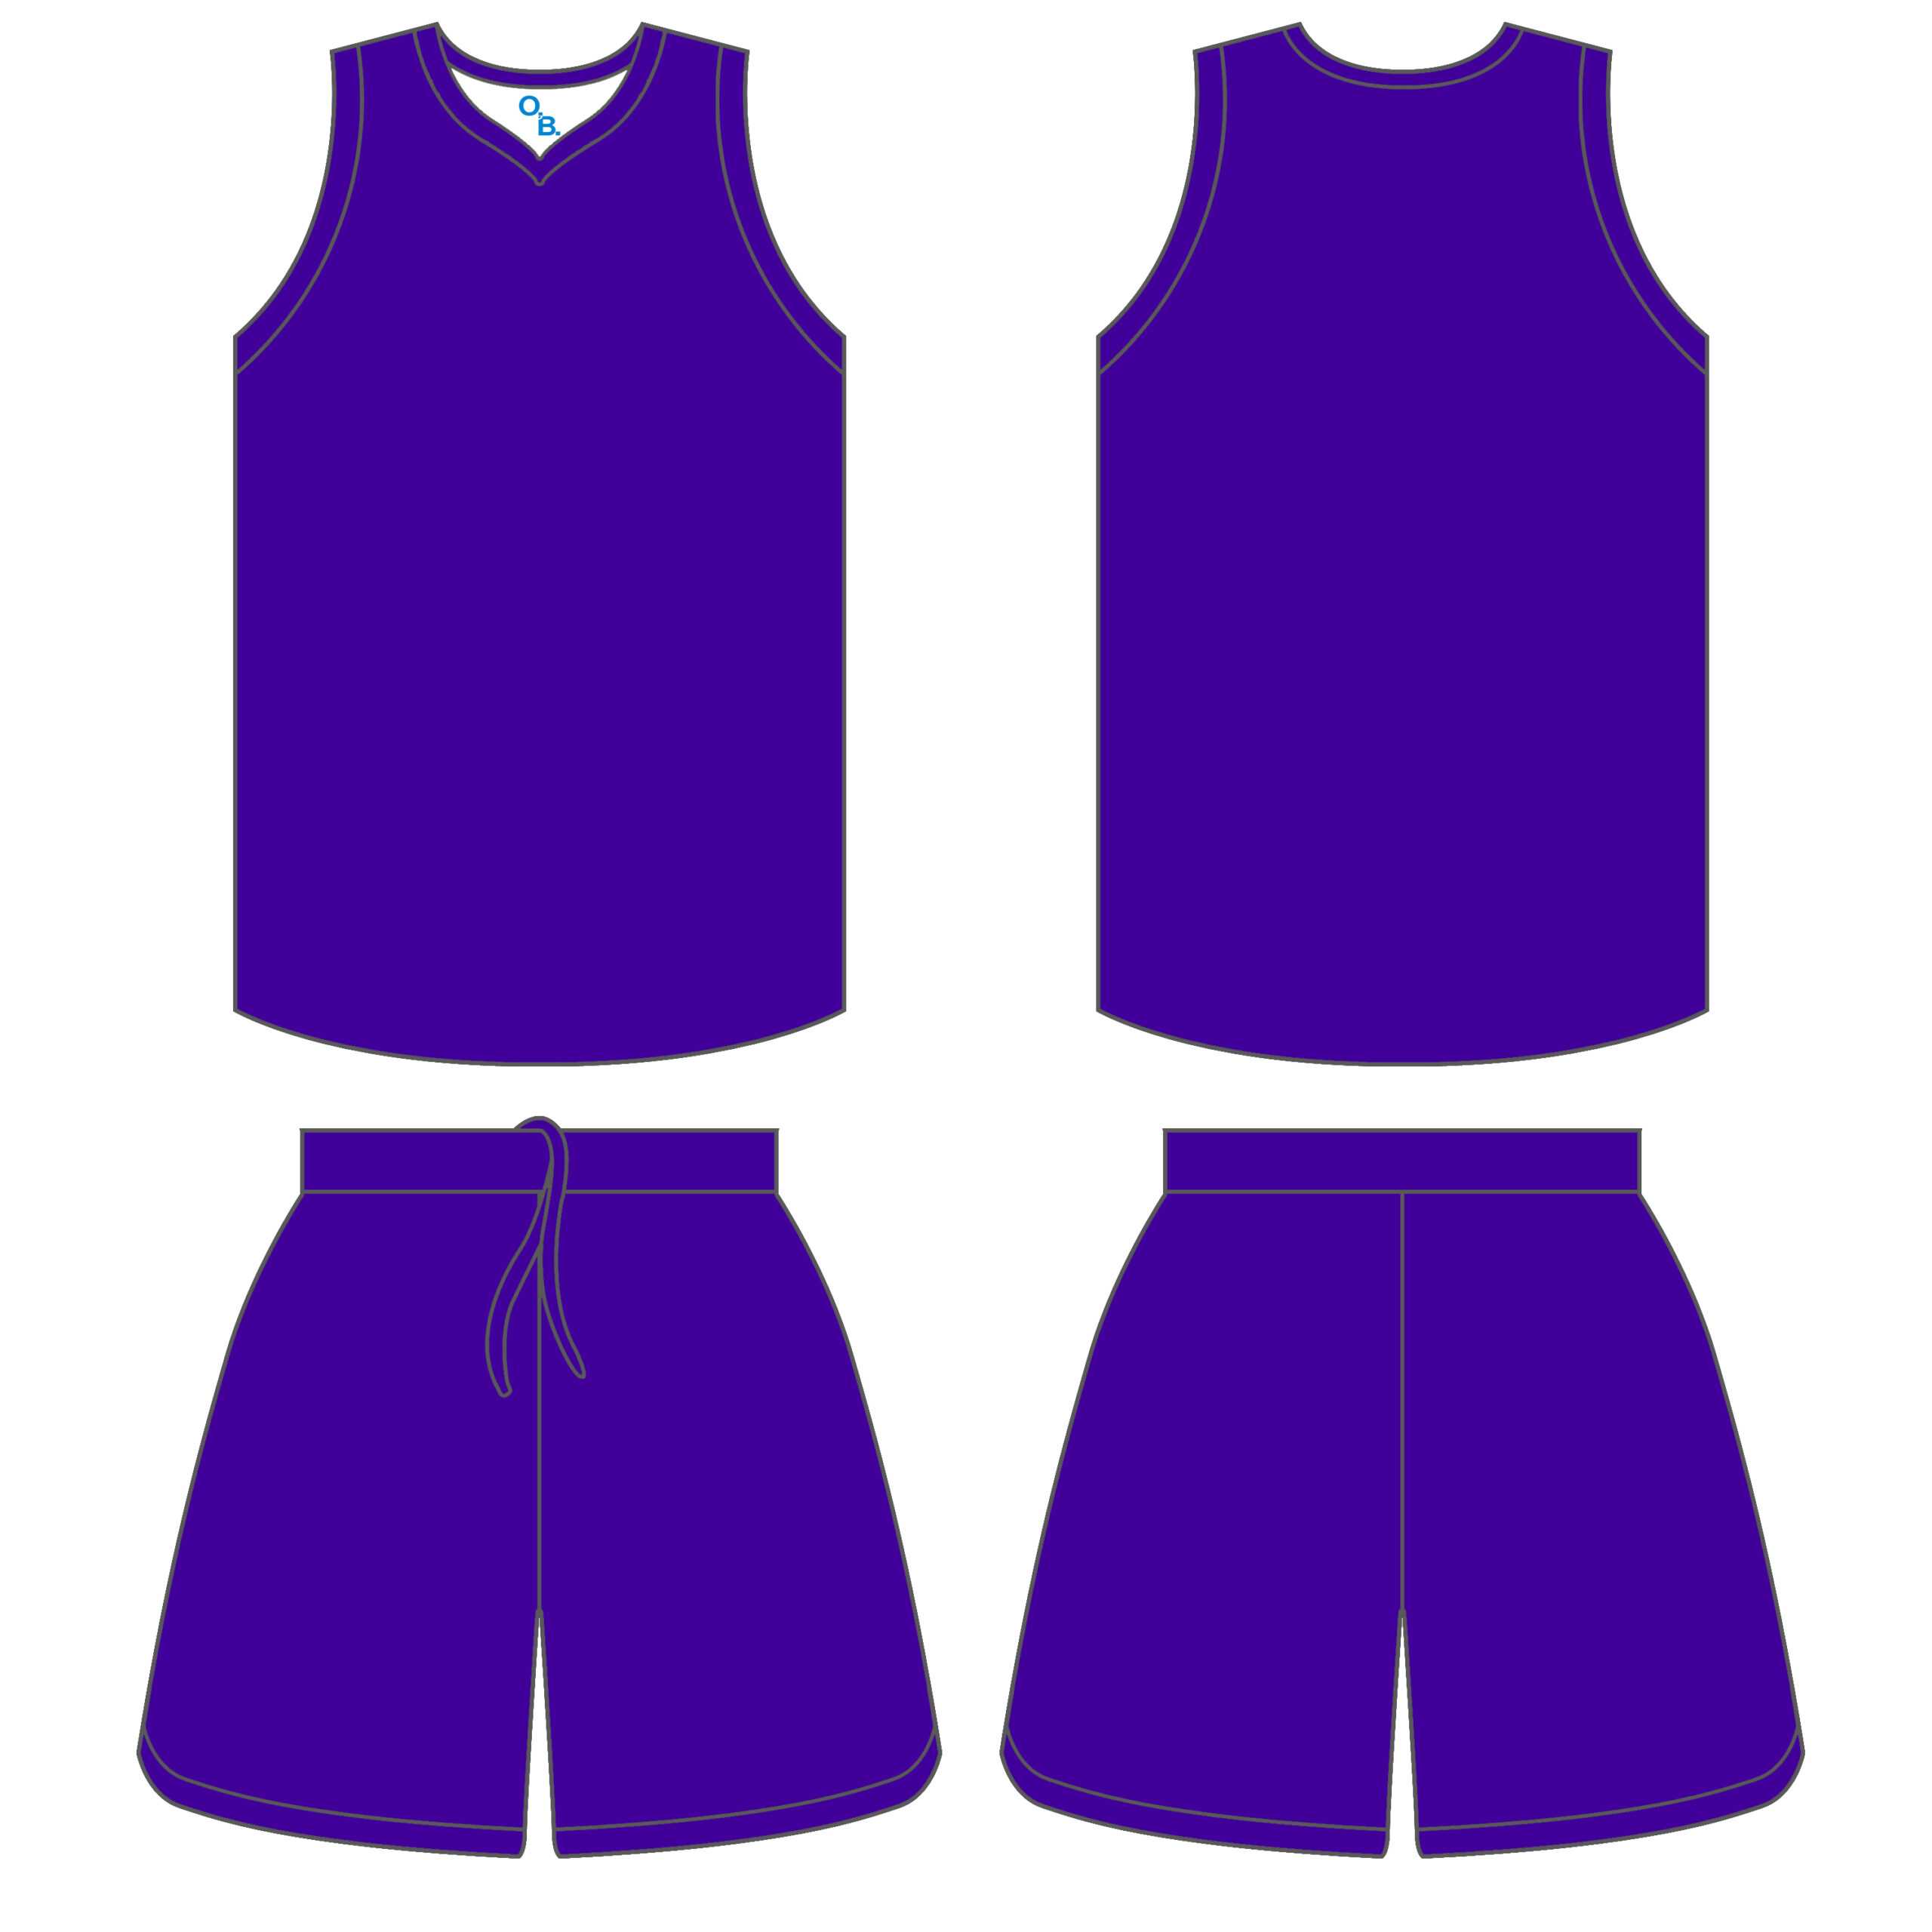 13 Basketball Uniform Psd Templates Images – Basketball Regarding Blank Basketball Uniform Template